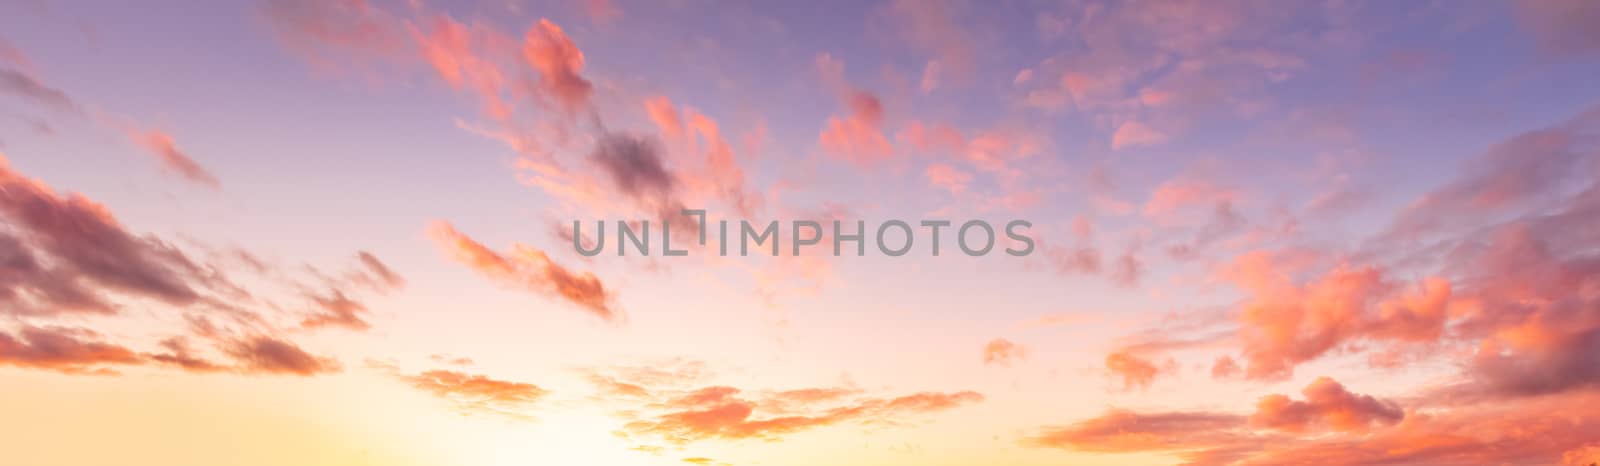 Colorful orange-purple dramatic clouds lit by the setting sun ag by Eugene_Yemelyanov